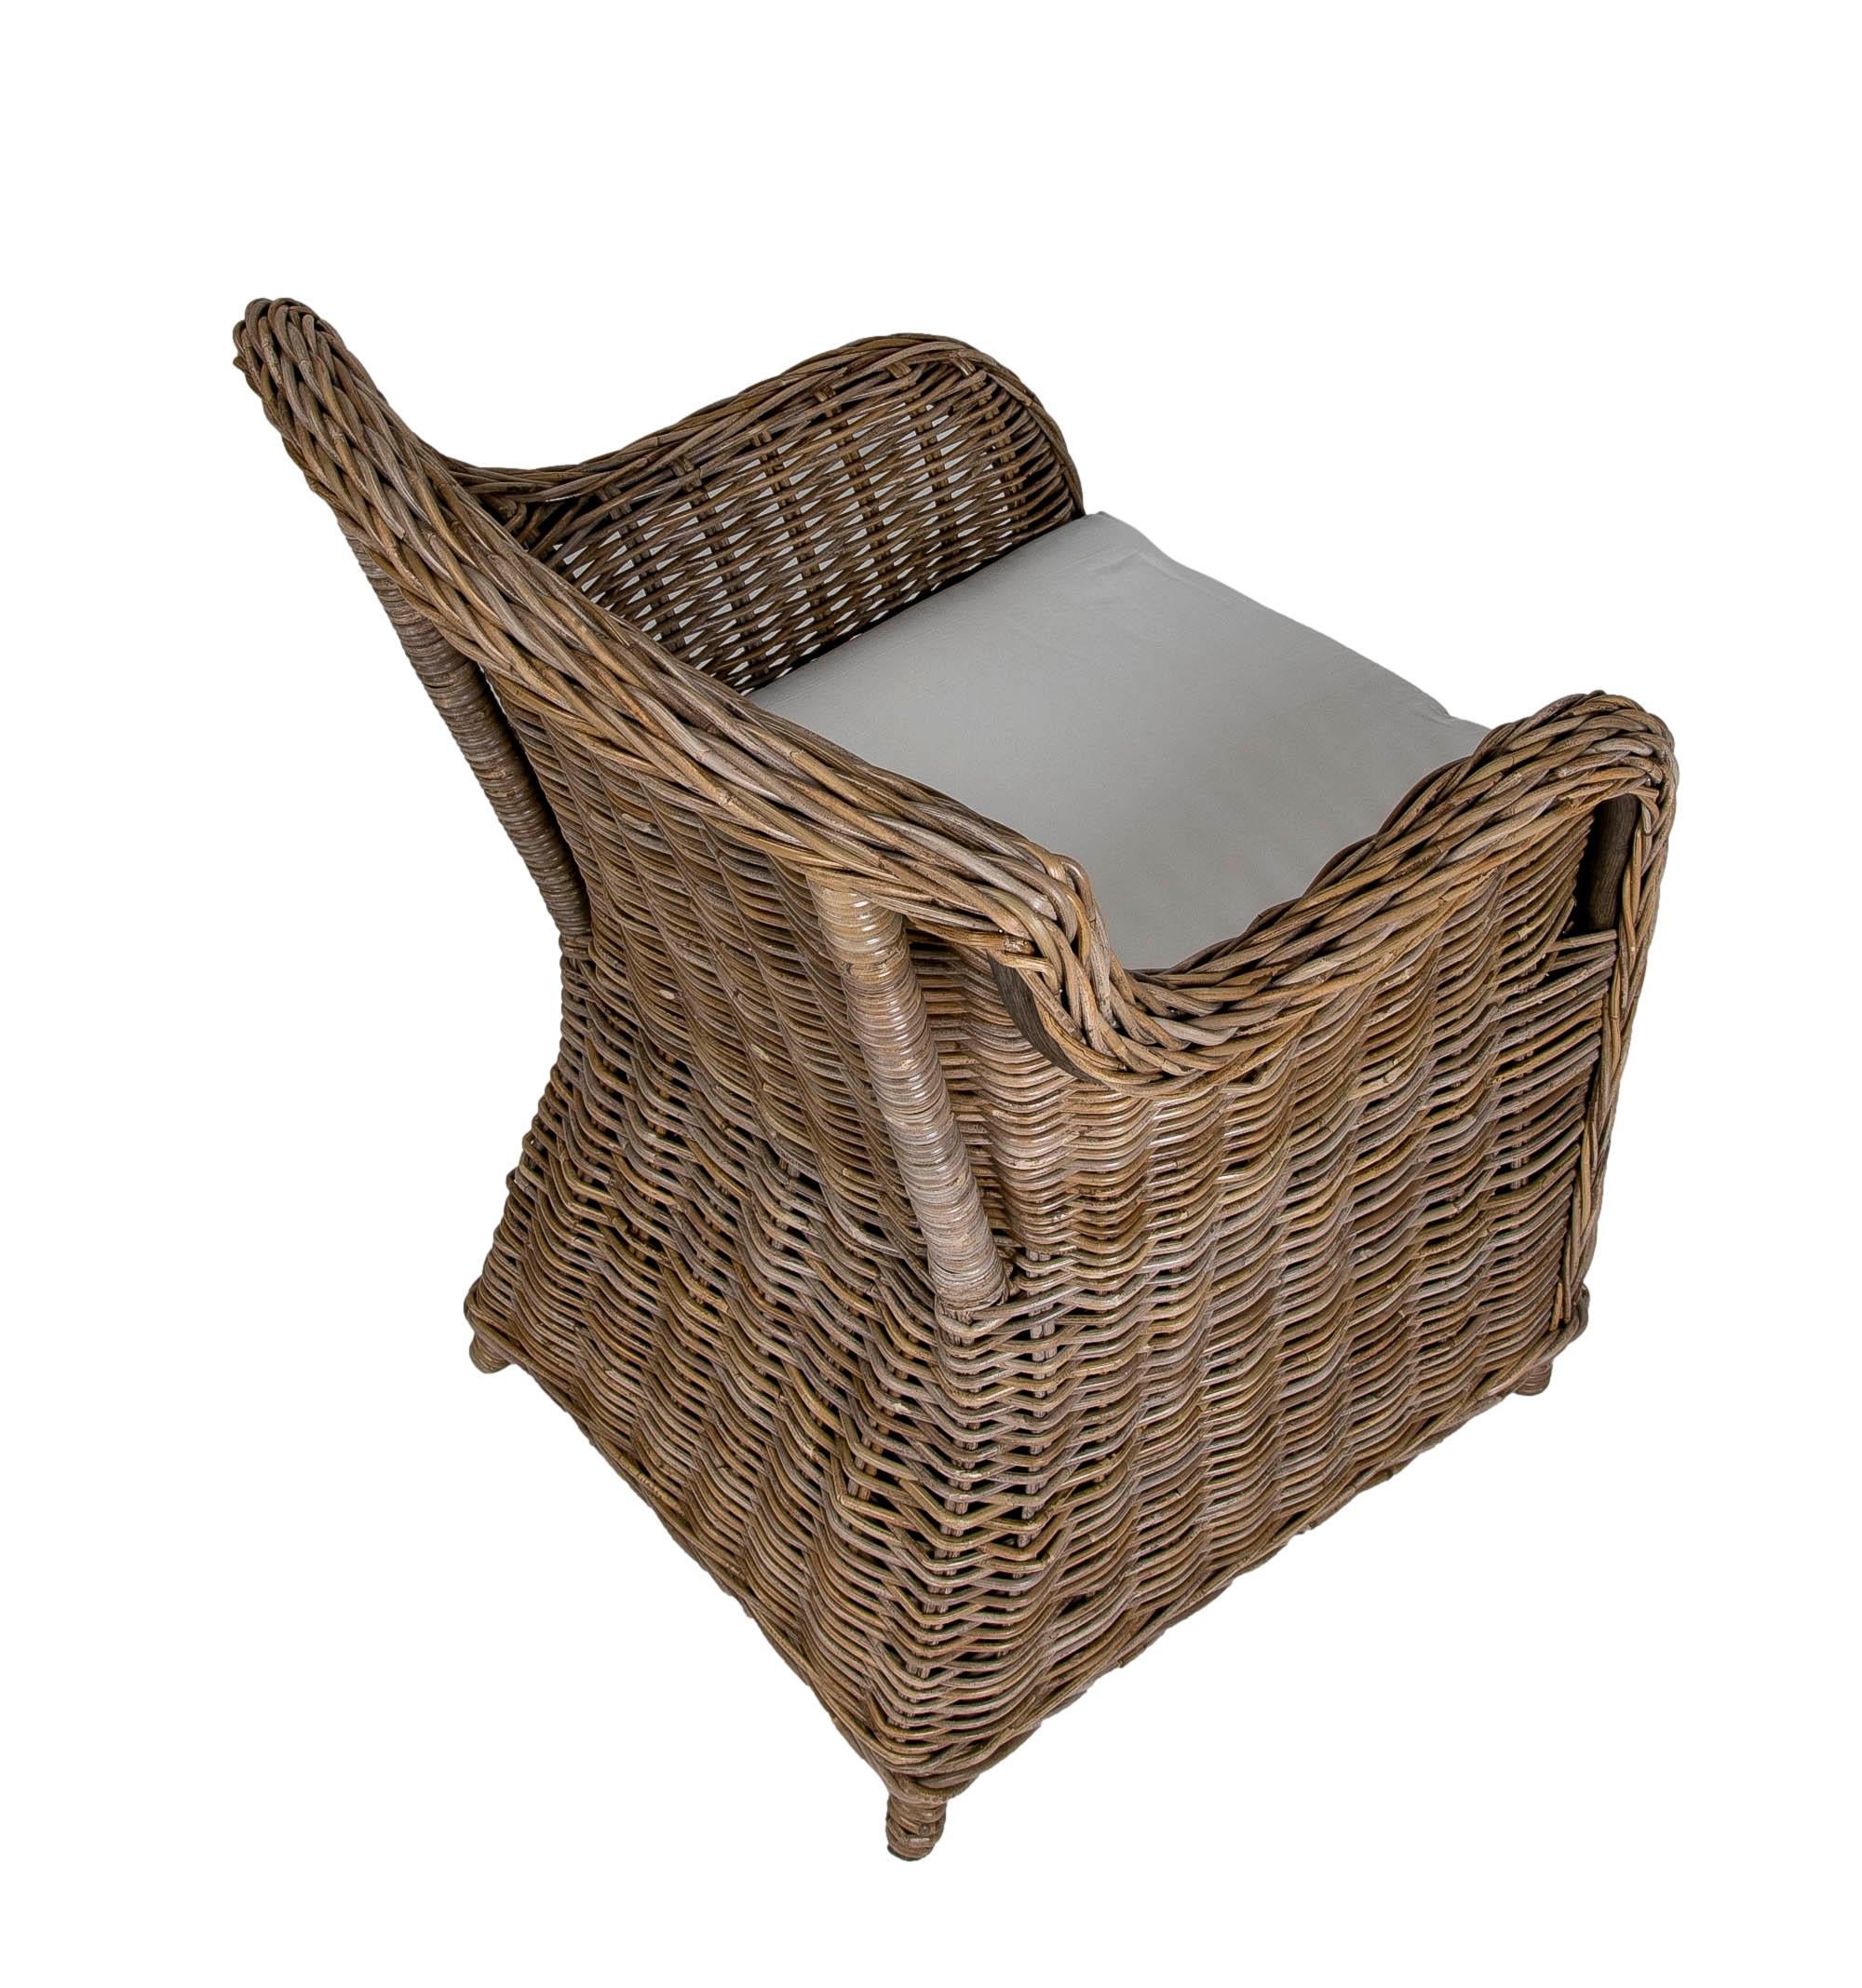  Rattan Garden Chair with Cushion in Greyish Tone For Sale 11